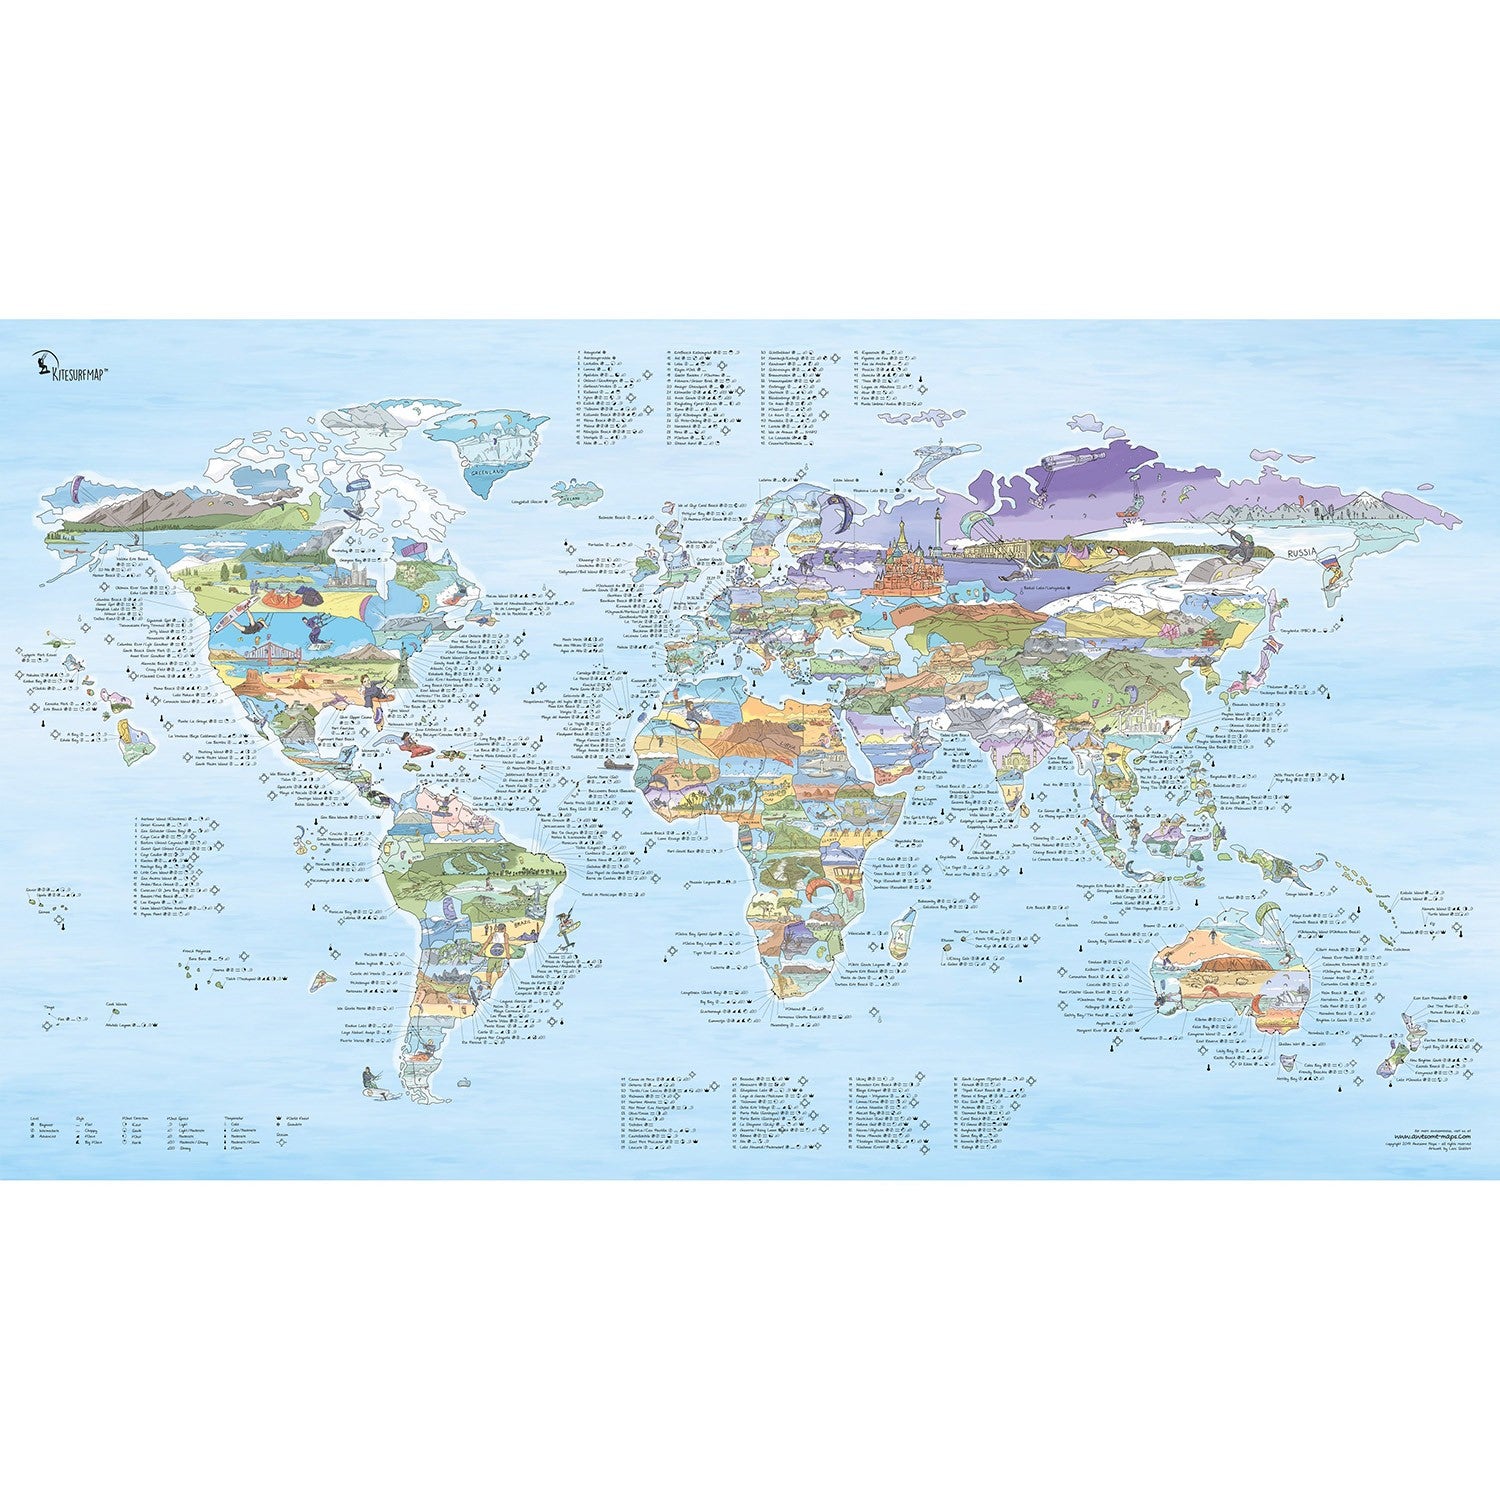 Mapa impresionante - Póster del mapa mundial - Kitesurf reescribible